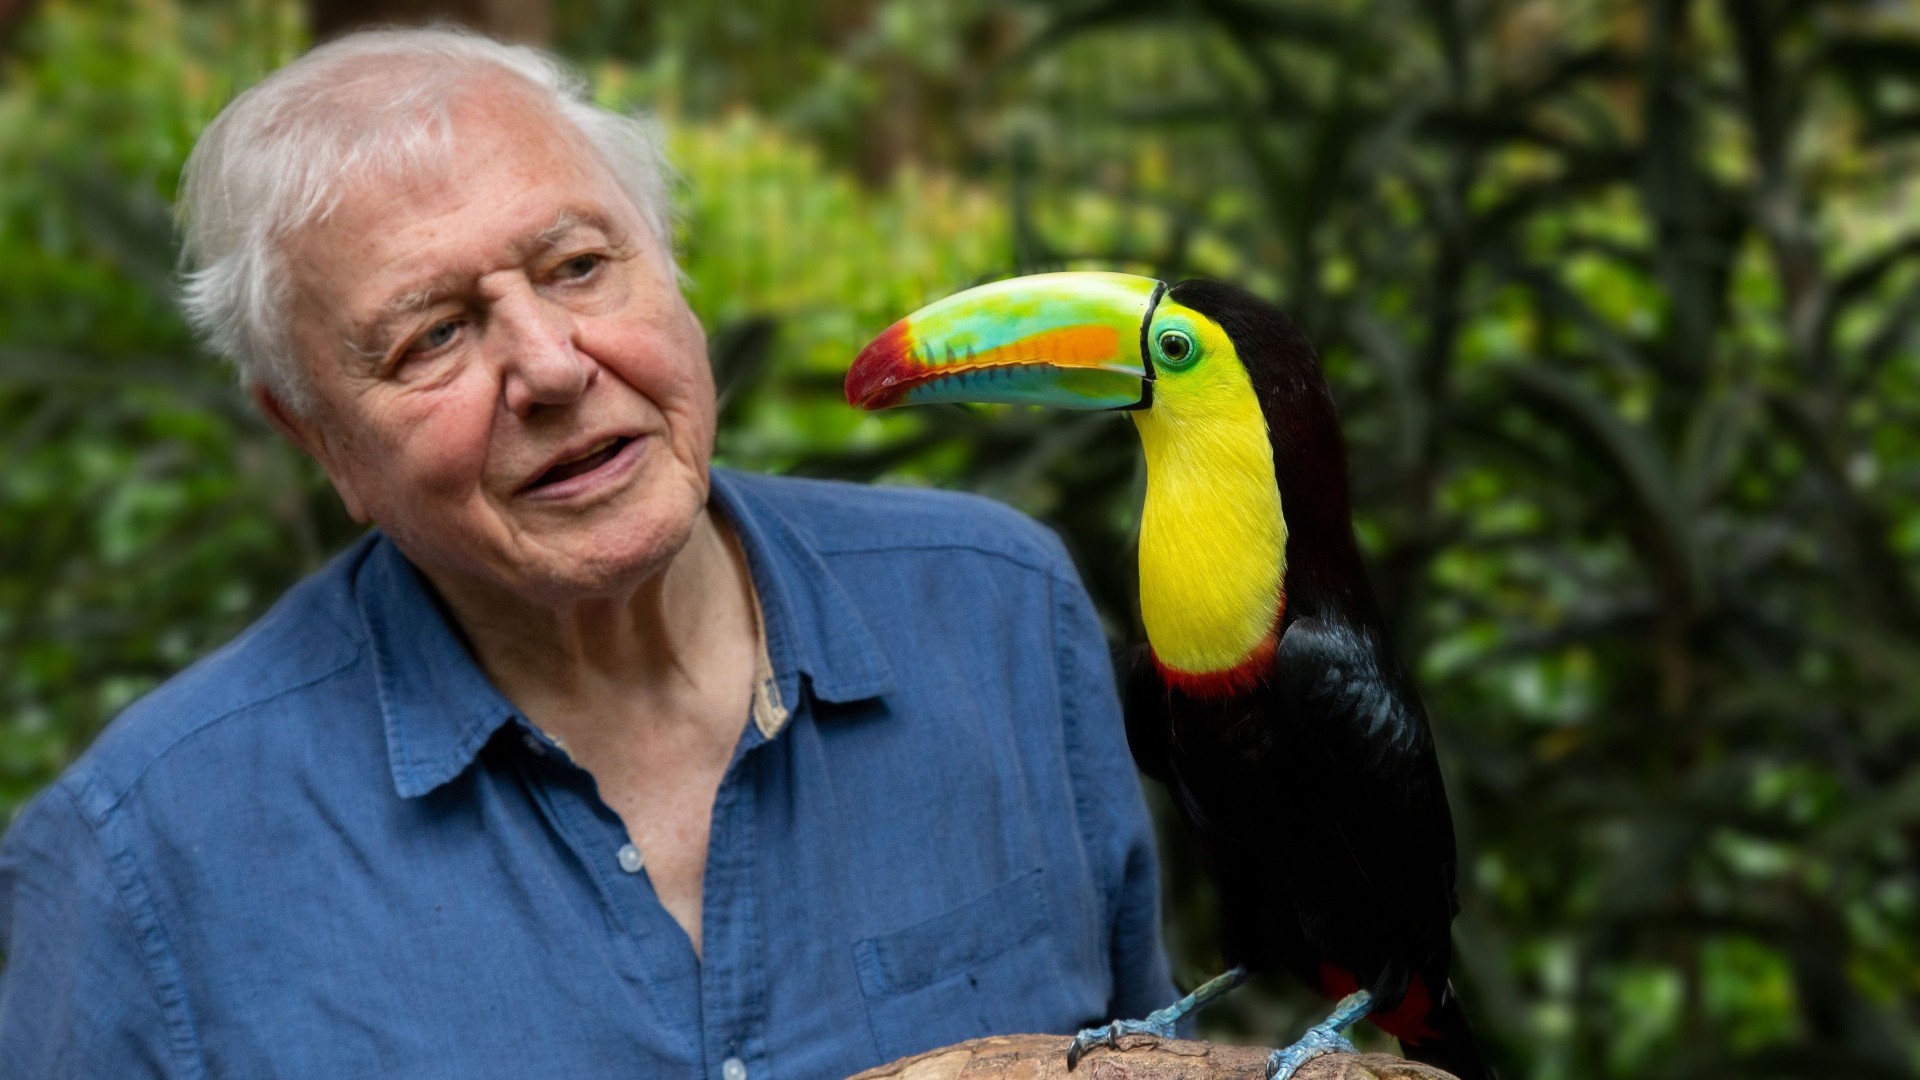 David Attenborough in Life in Colour